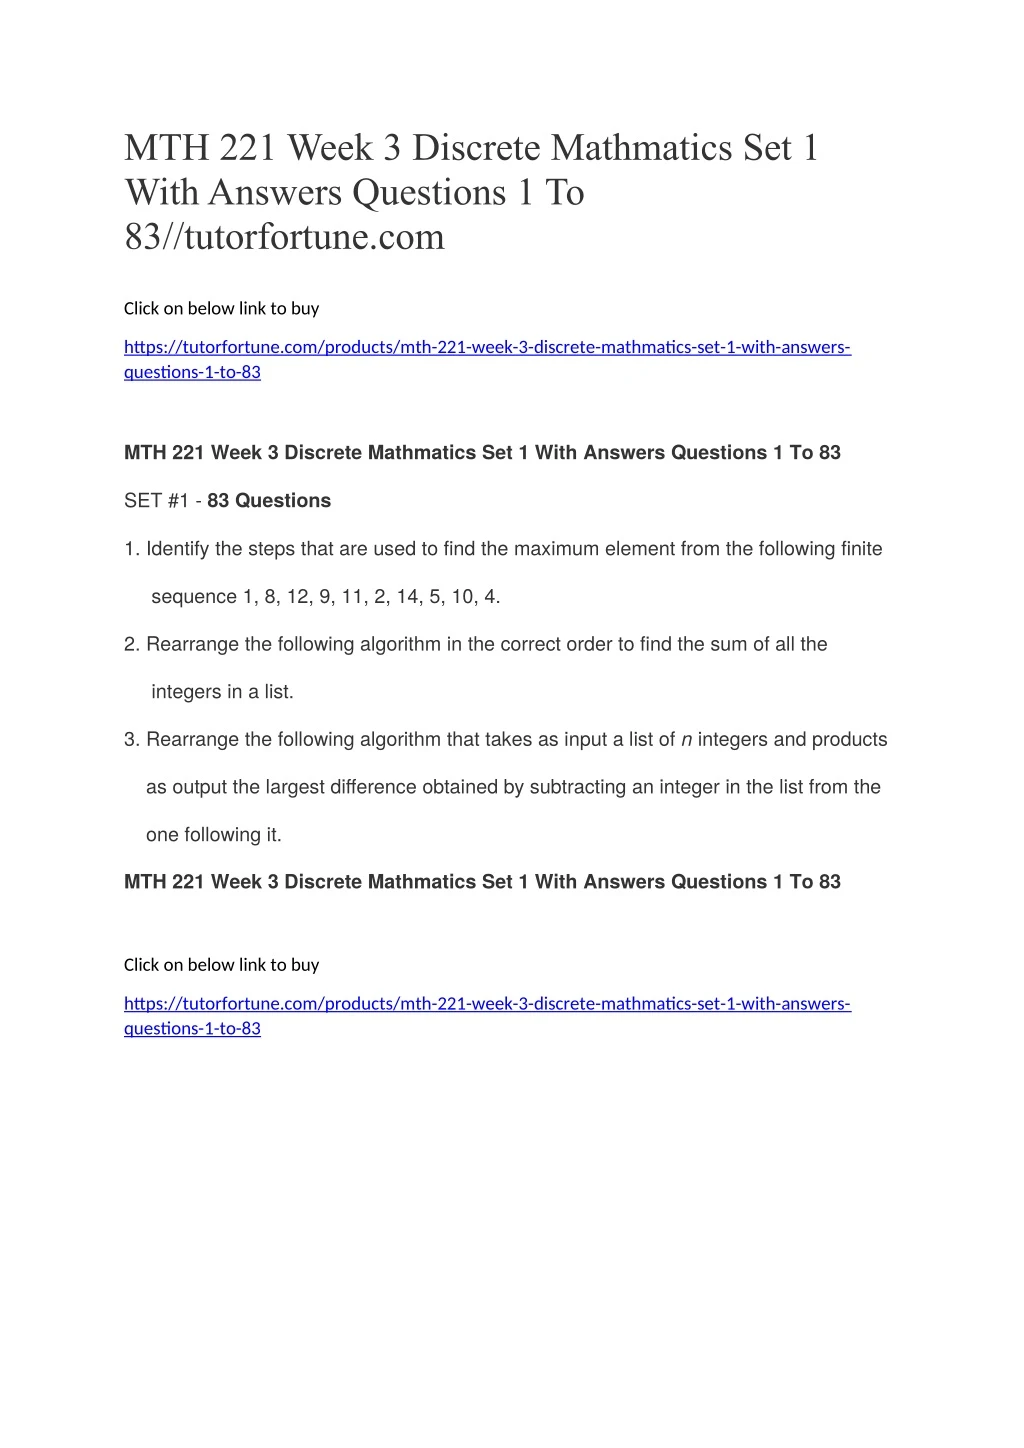 mth 221 week 3 discrete mathmatics set 1 with